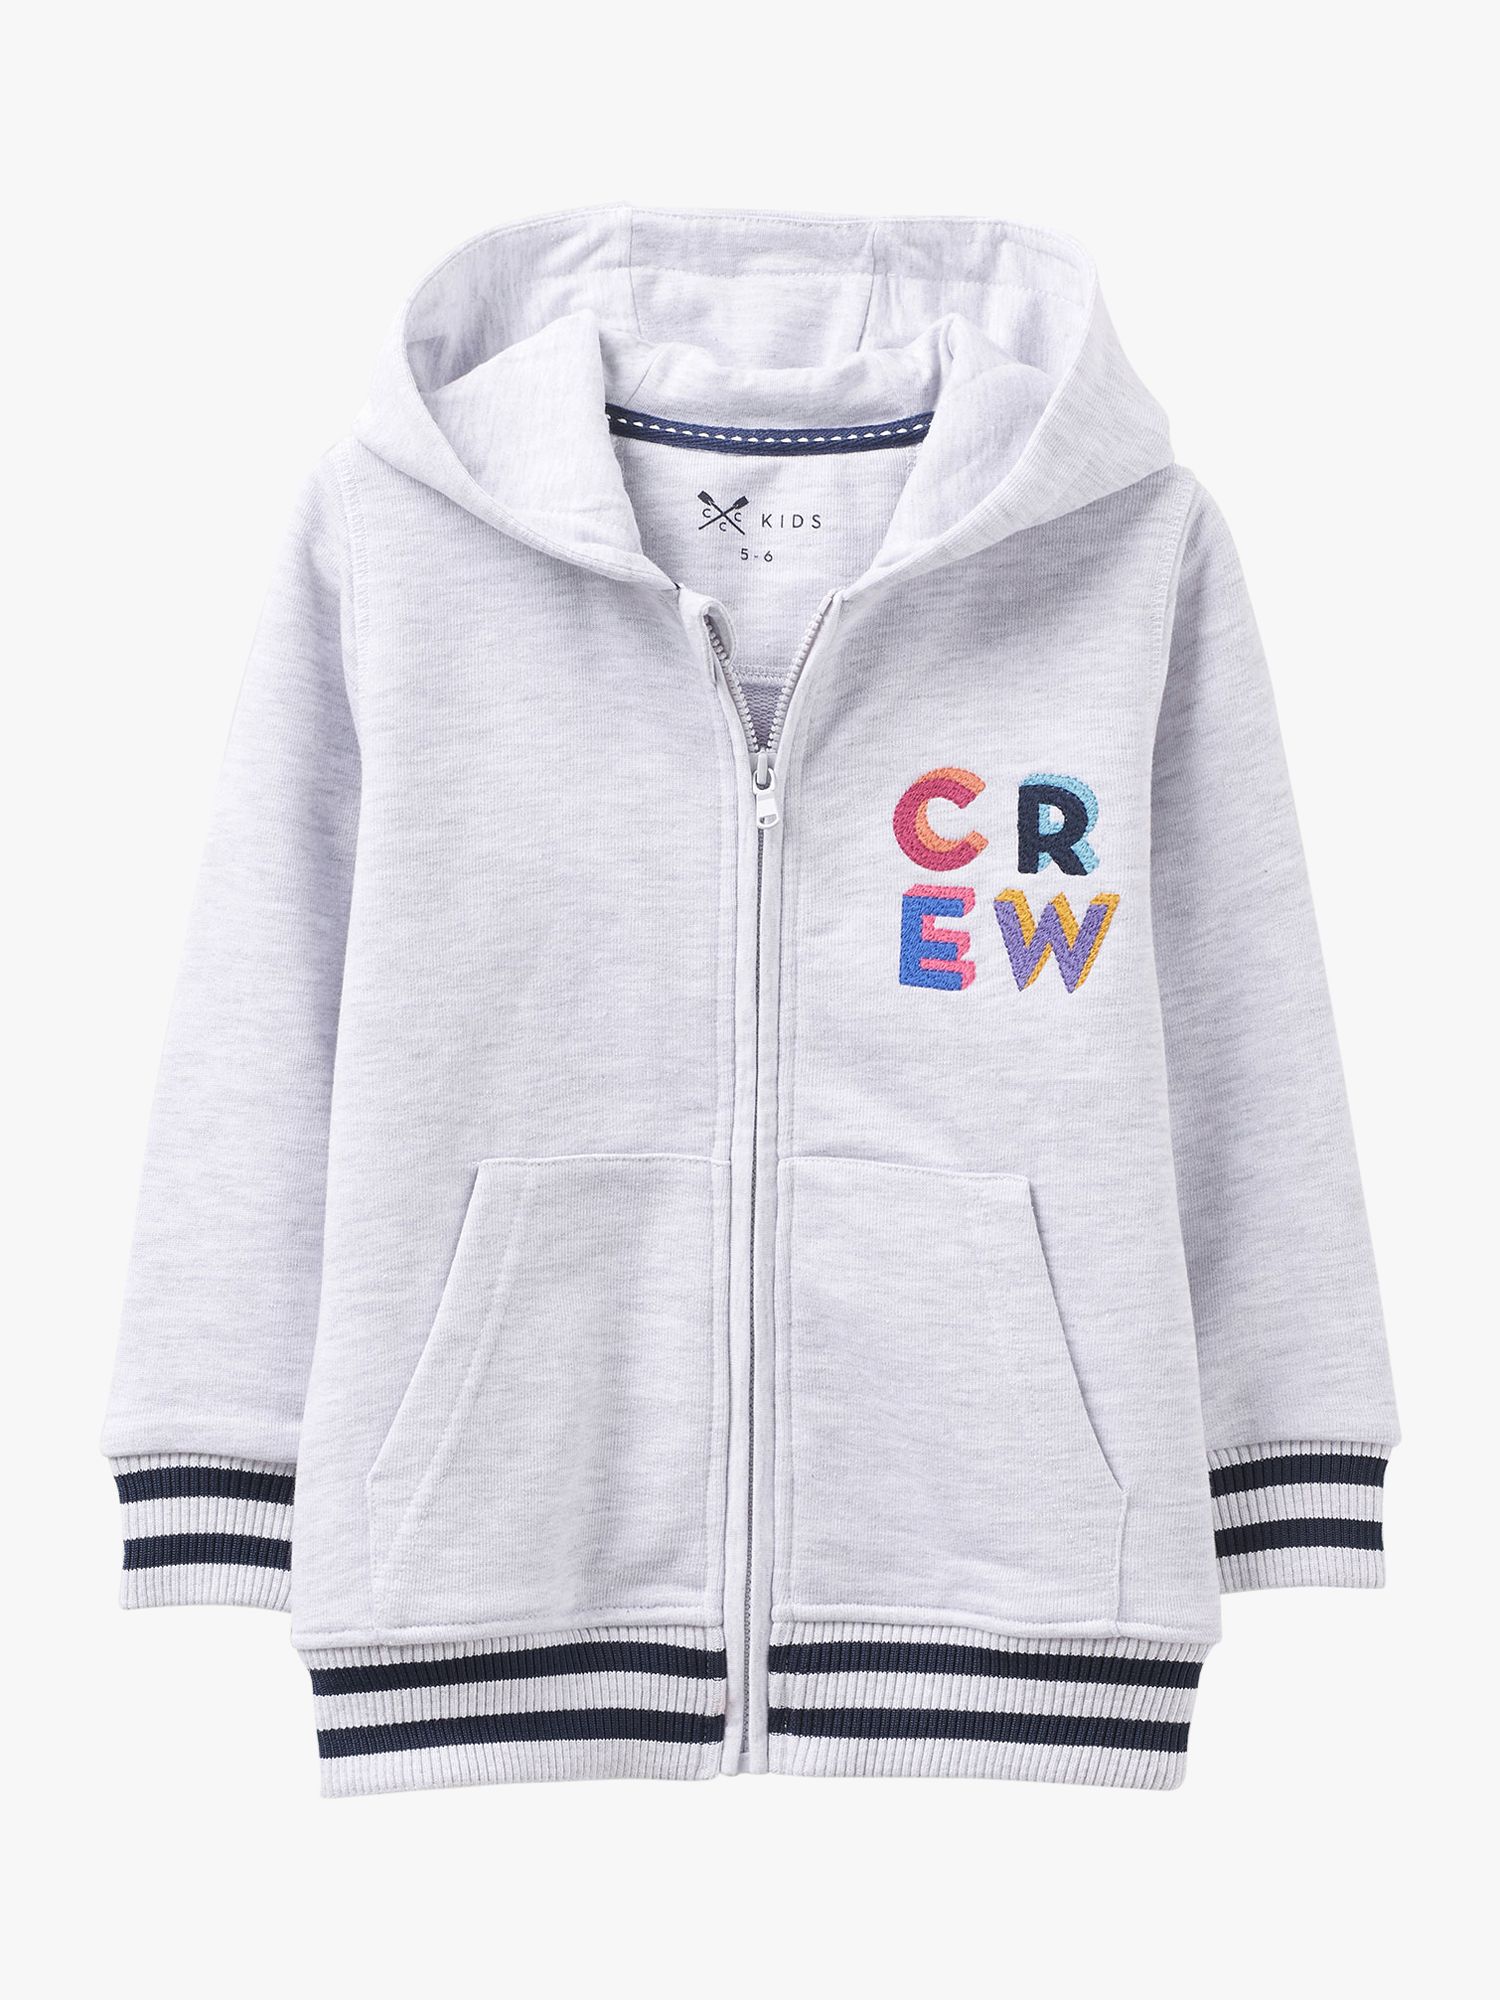 Crew Clothing Kids' CREW Zip Hoodie, Grey Marl